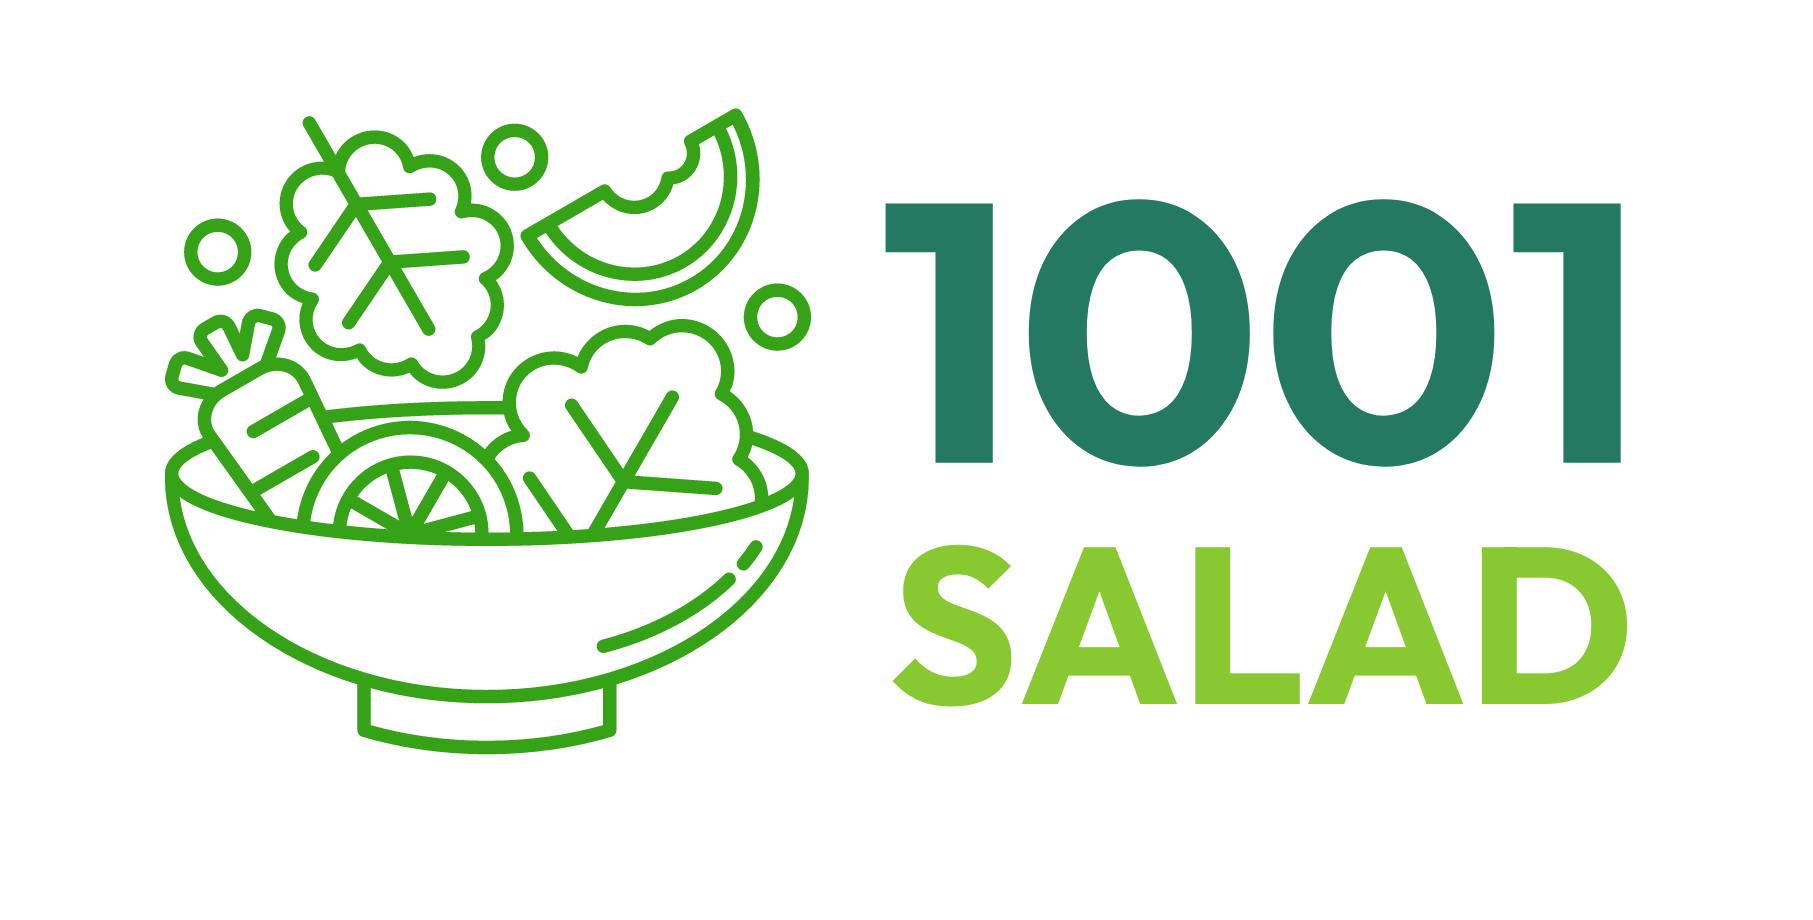 1001 Salad